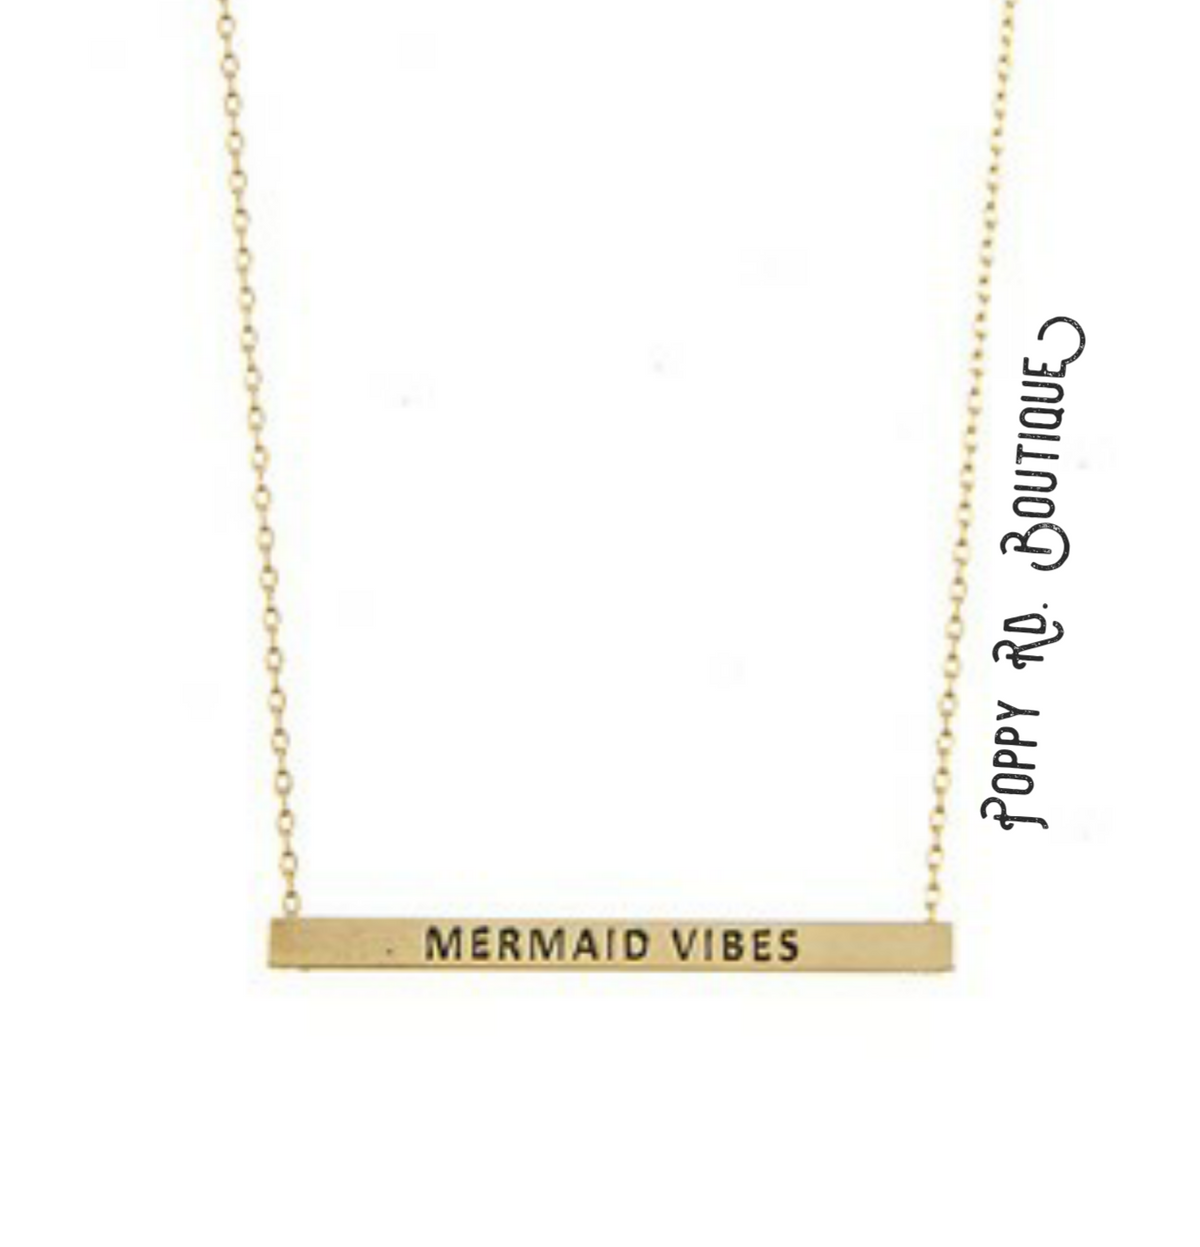 Mermaid Vibes necklace * on sale